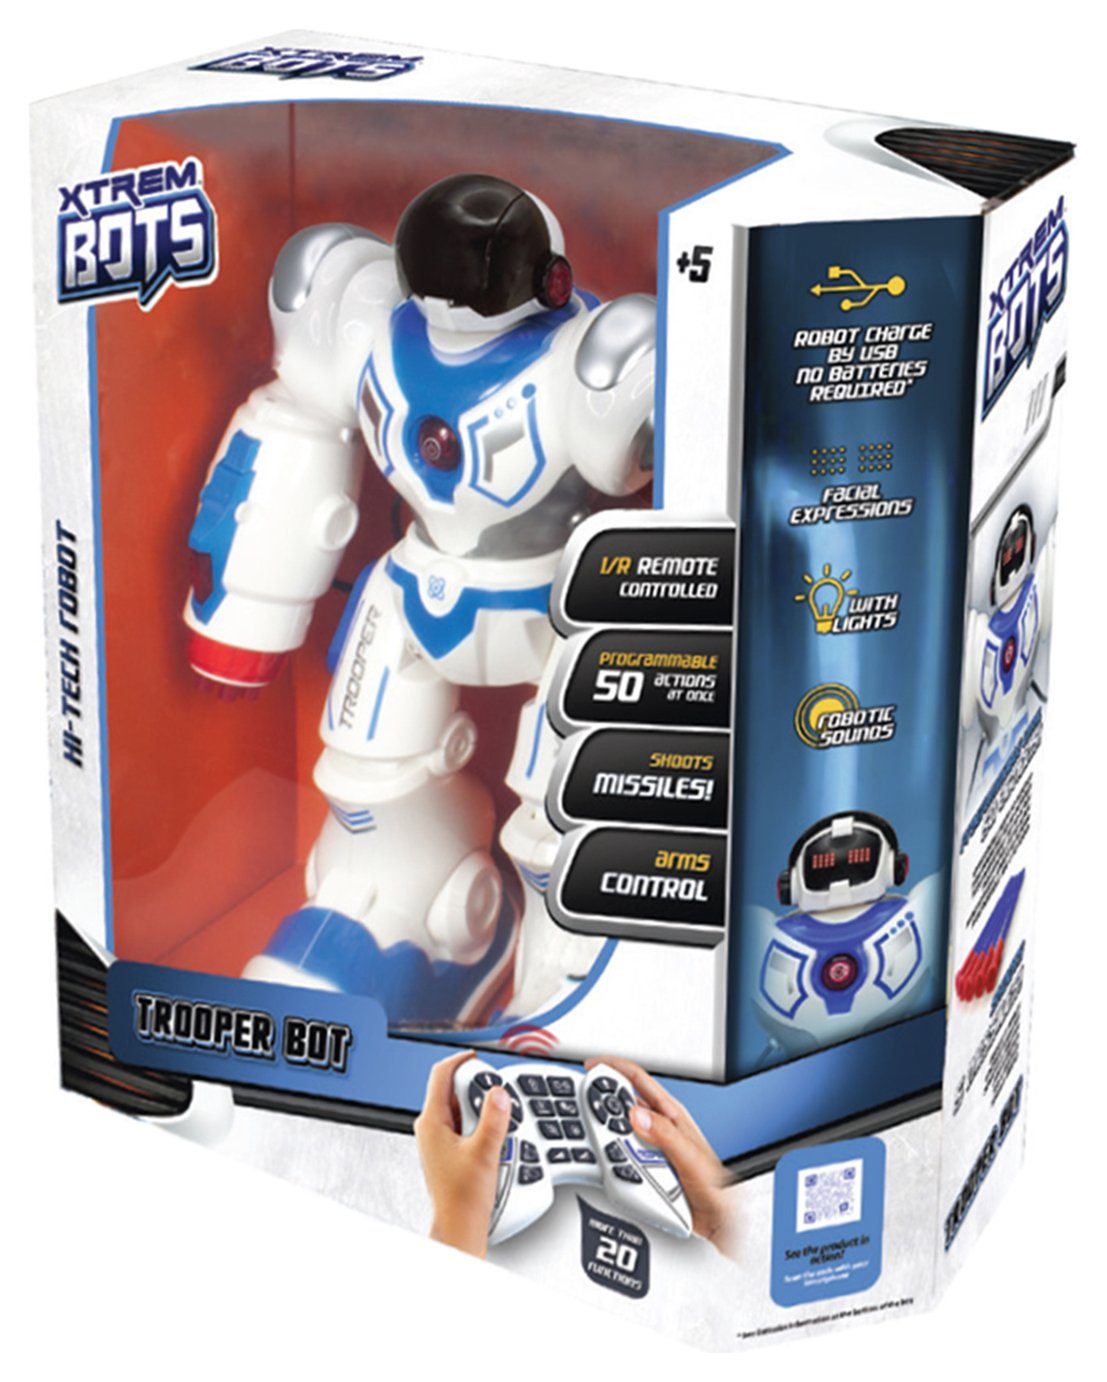 Xtrem Bots Trooper Bot Robot